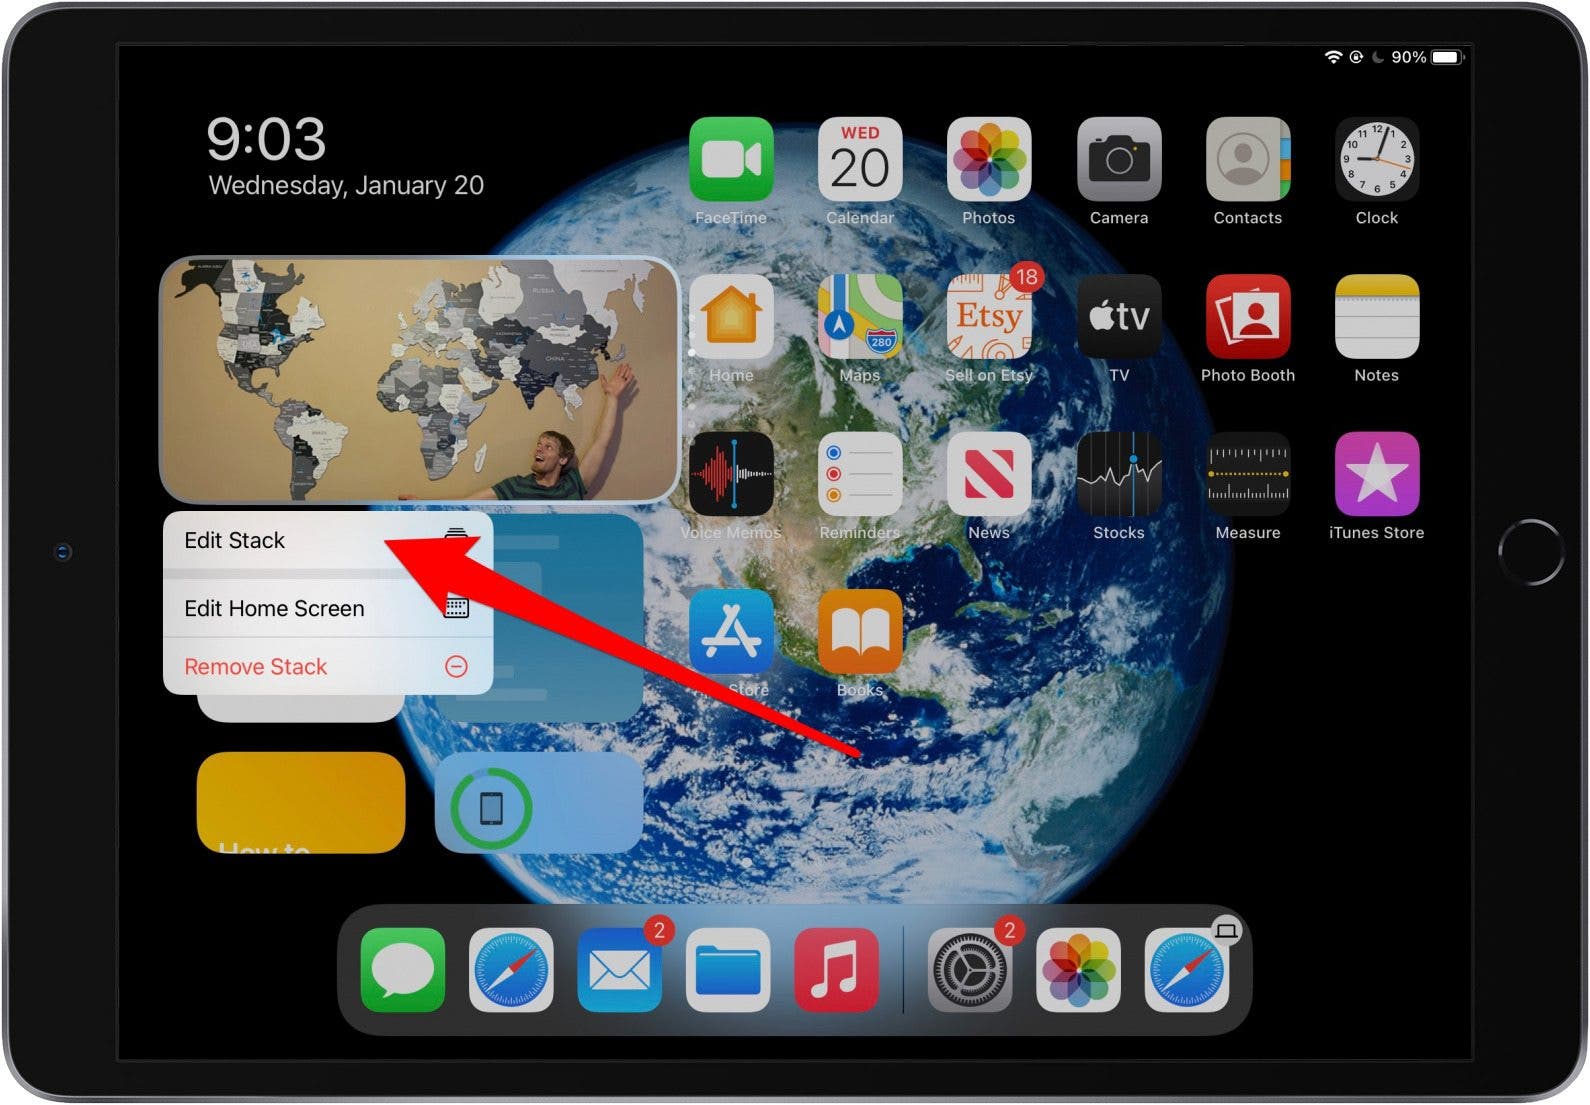 Mantenga presionada la pila de widgets de iPad que desea editar